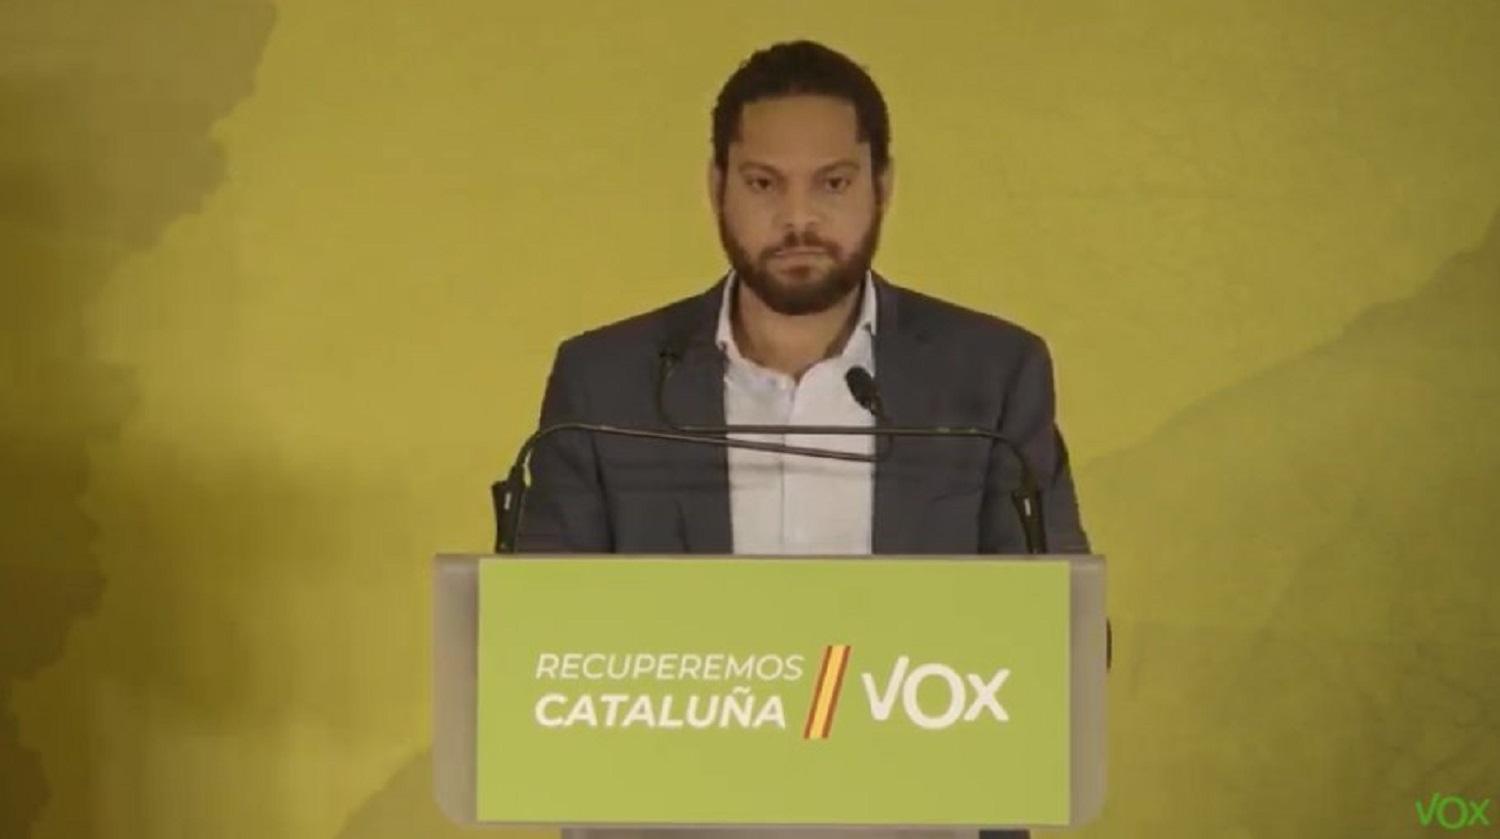 El candidato de Vox a la Generalitat, Ignacio Garriga. Fuente: Twitter.